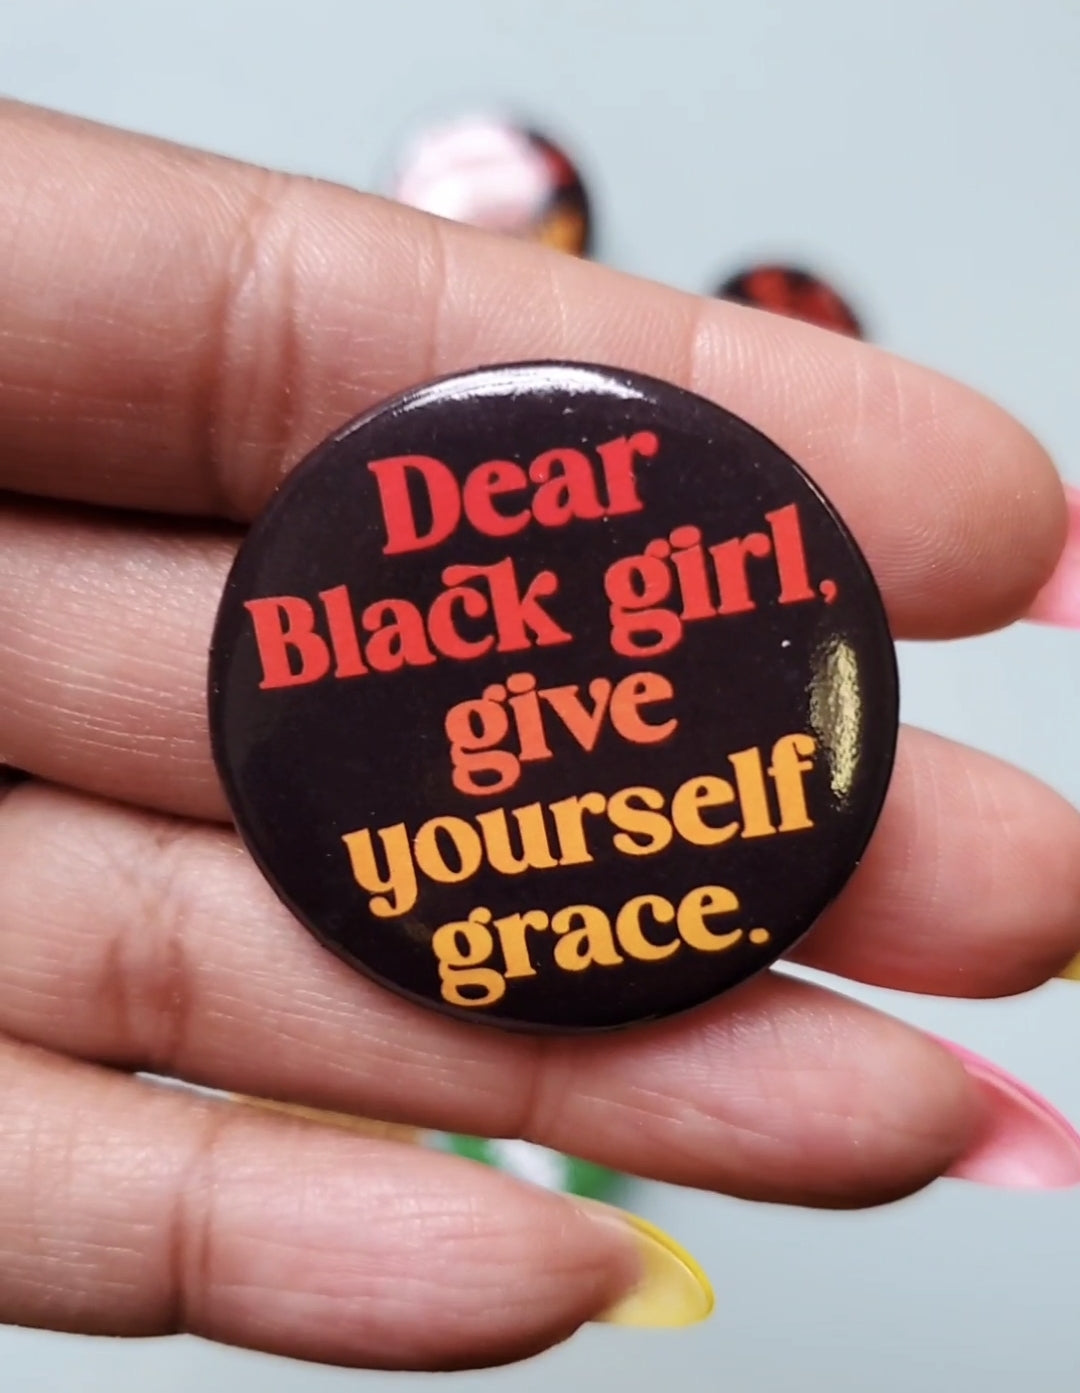 Dear Black Girls